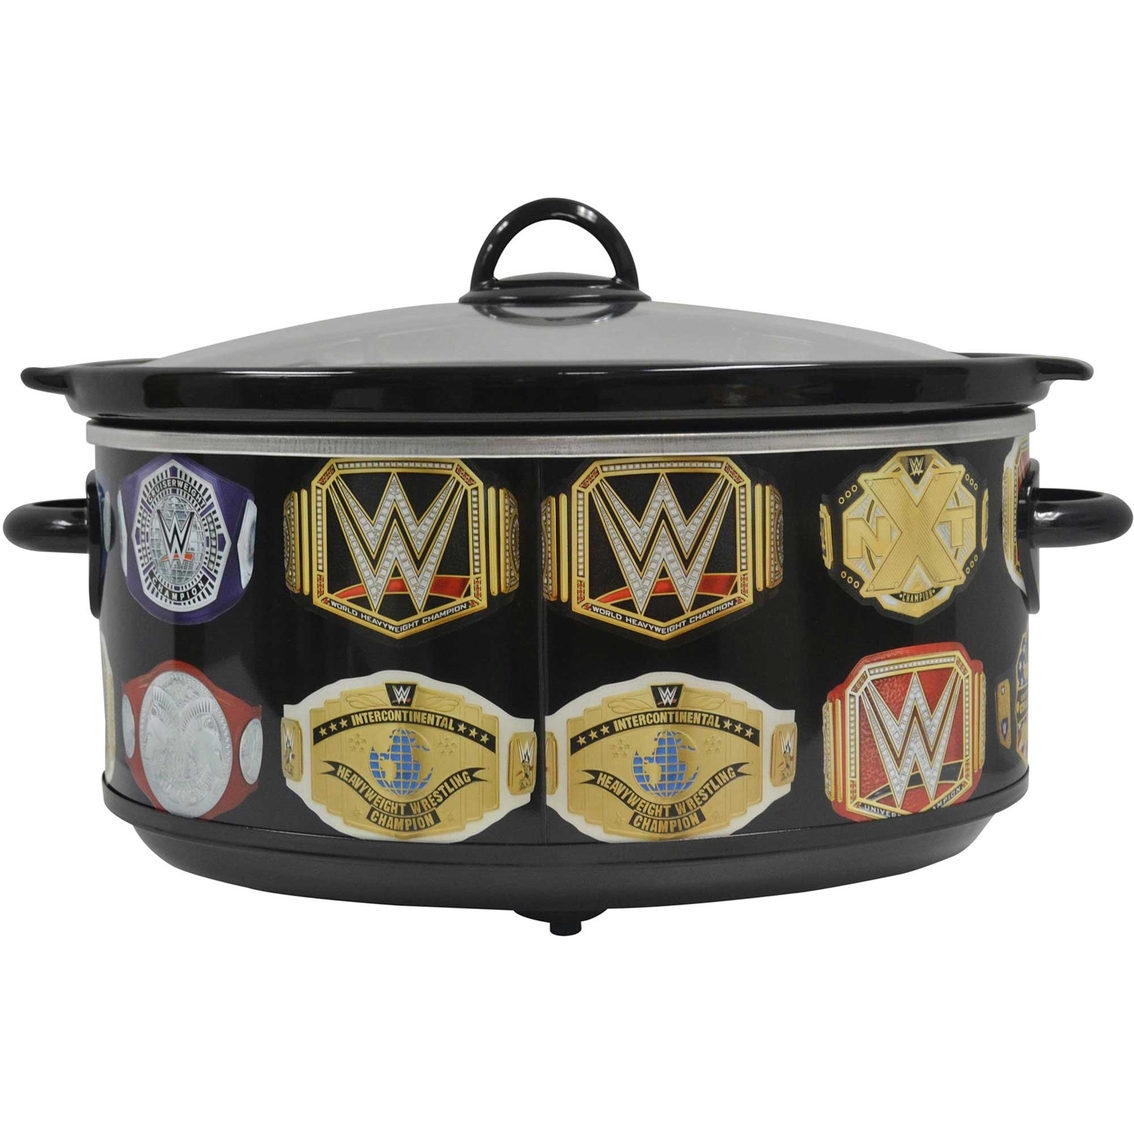 Uncanny Brands WWE Championship Belt 2 QT Slow Cooker- Removable